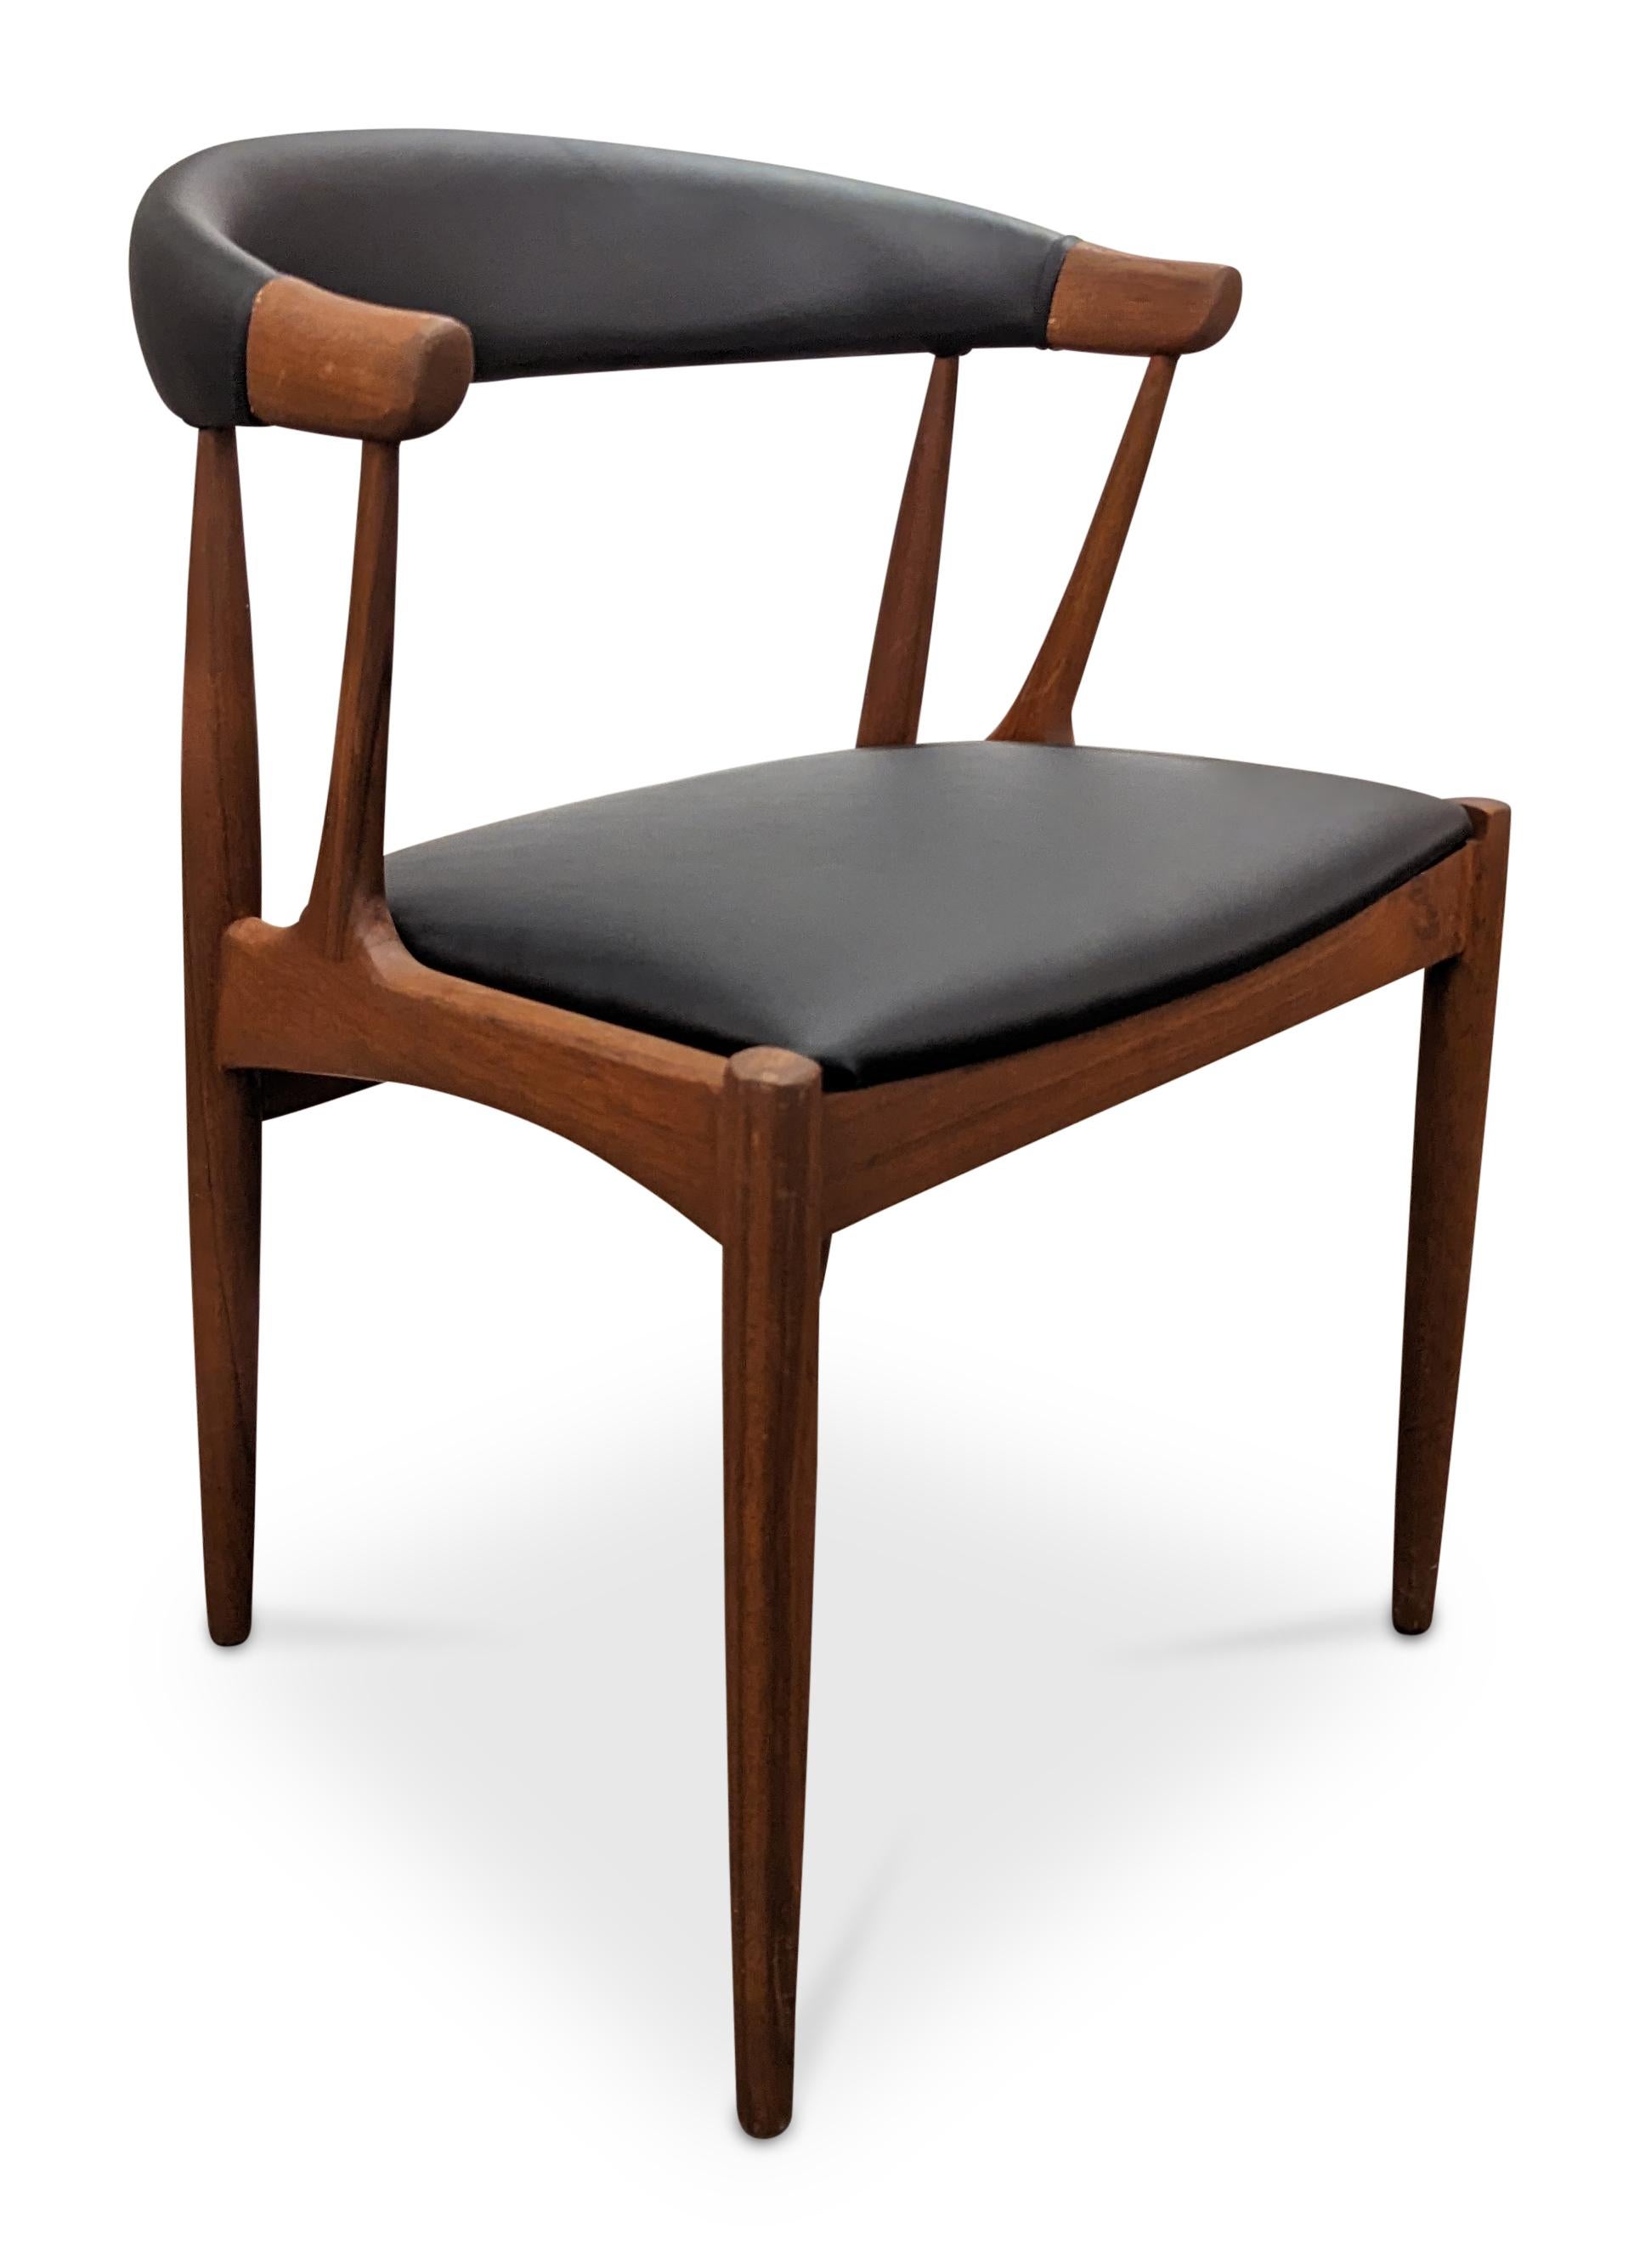 Mid-Century Modern Vintage Danish Mid Century Johannes Andersen Arm Chair - 022432 For Sale